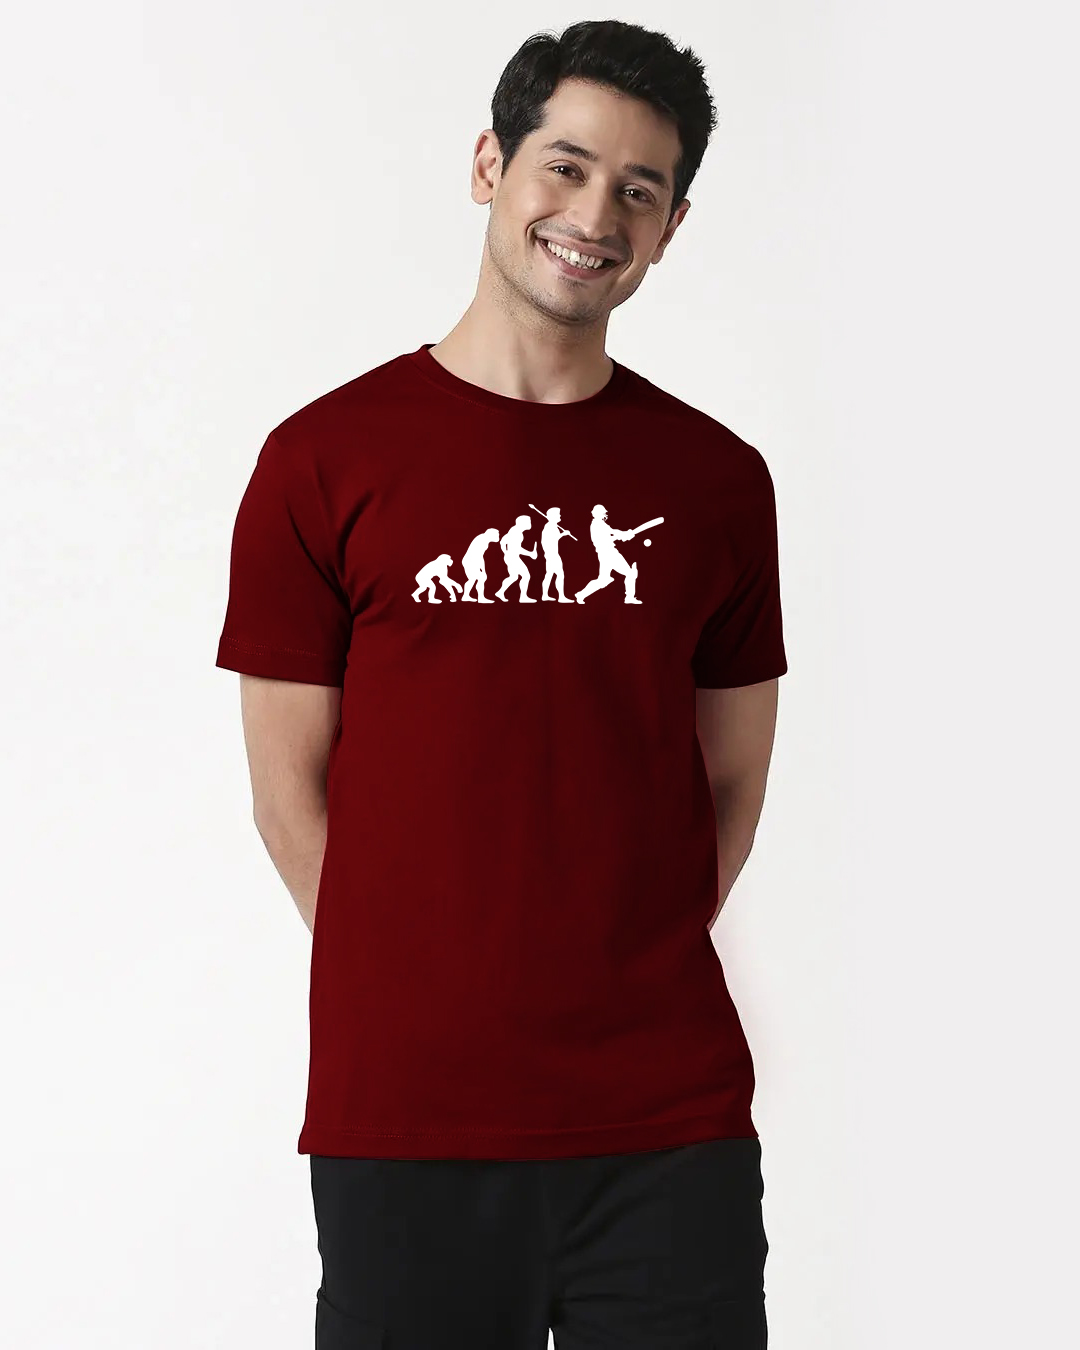 Cricket Evolution Half Sleeve T-Shirt for Men - ambussh.com